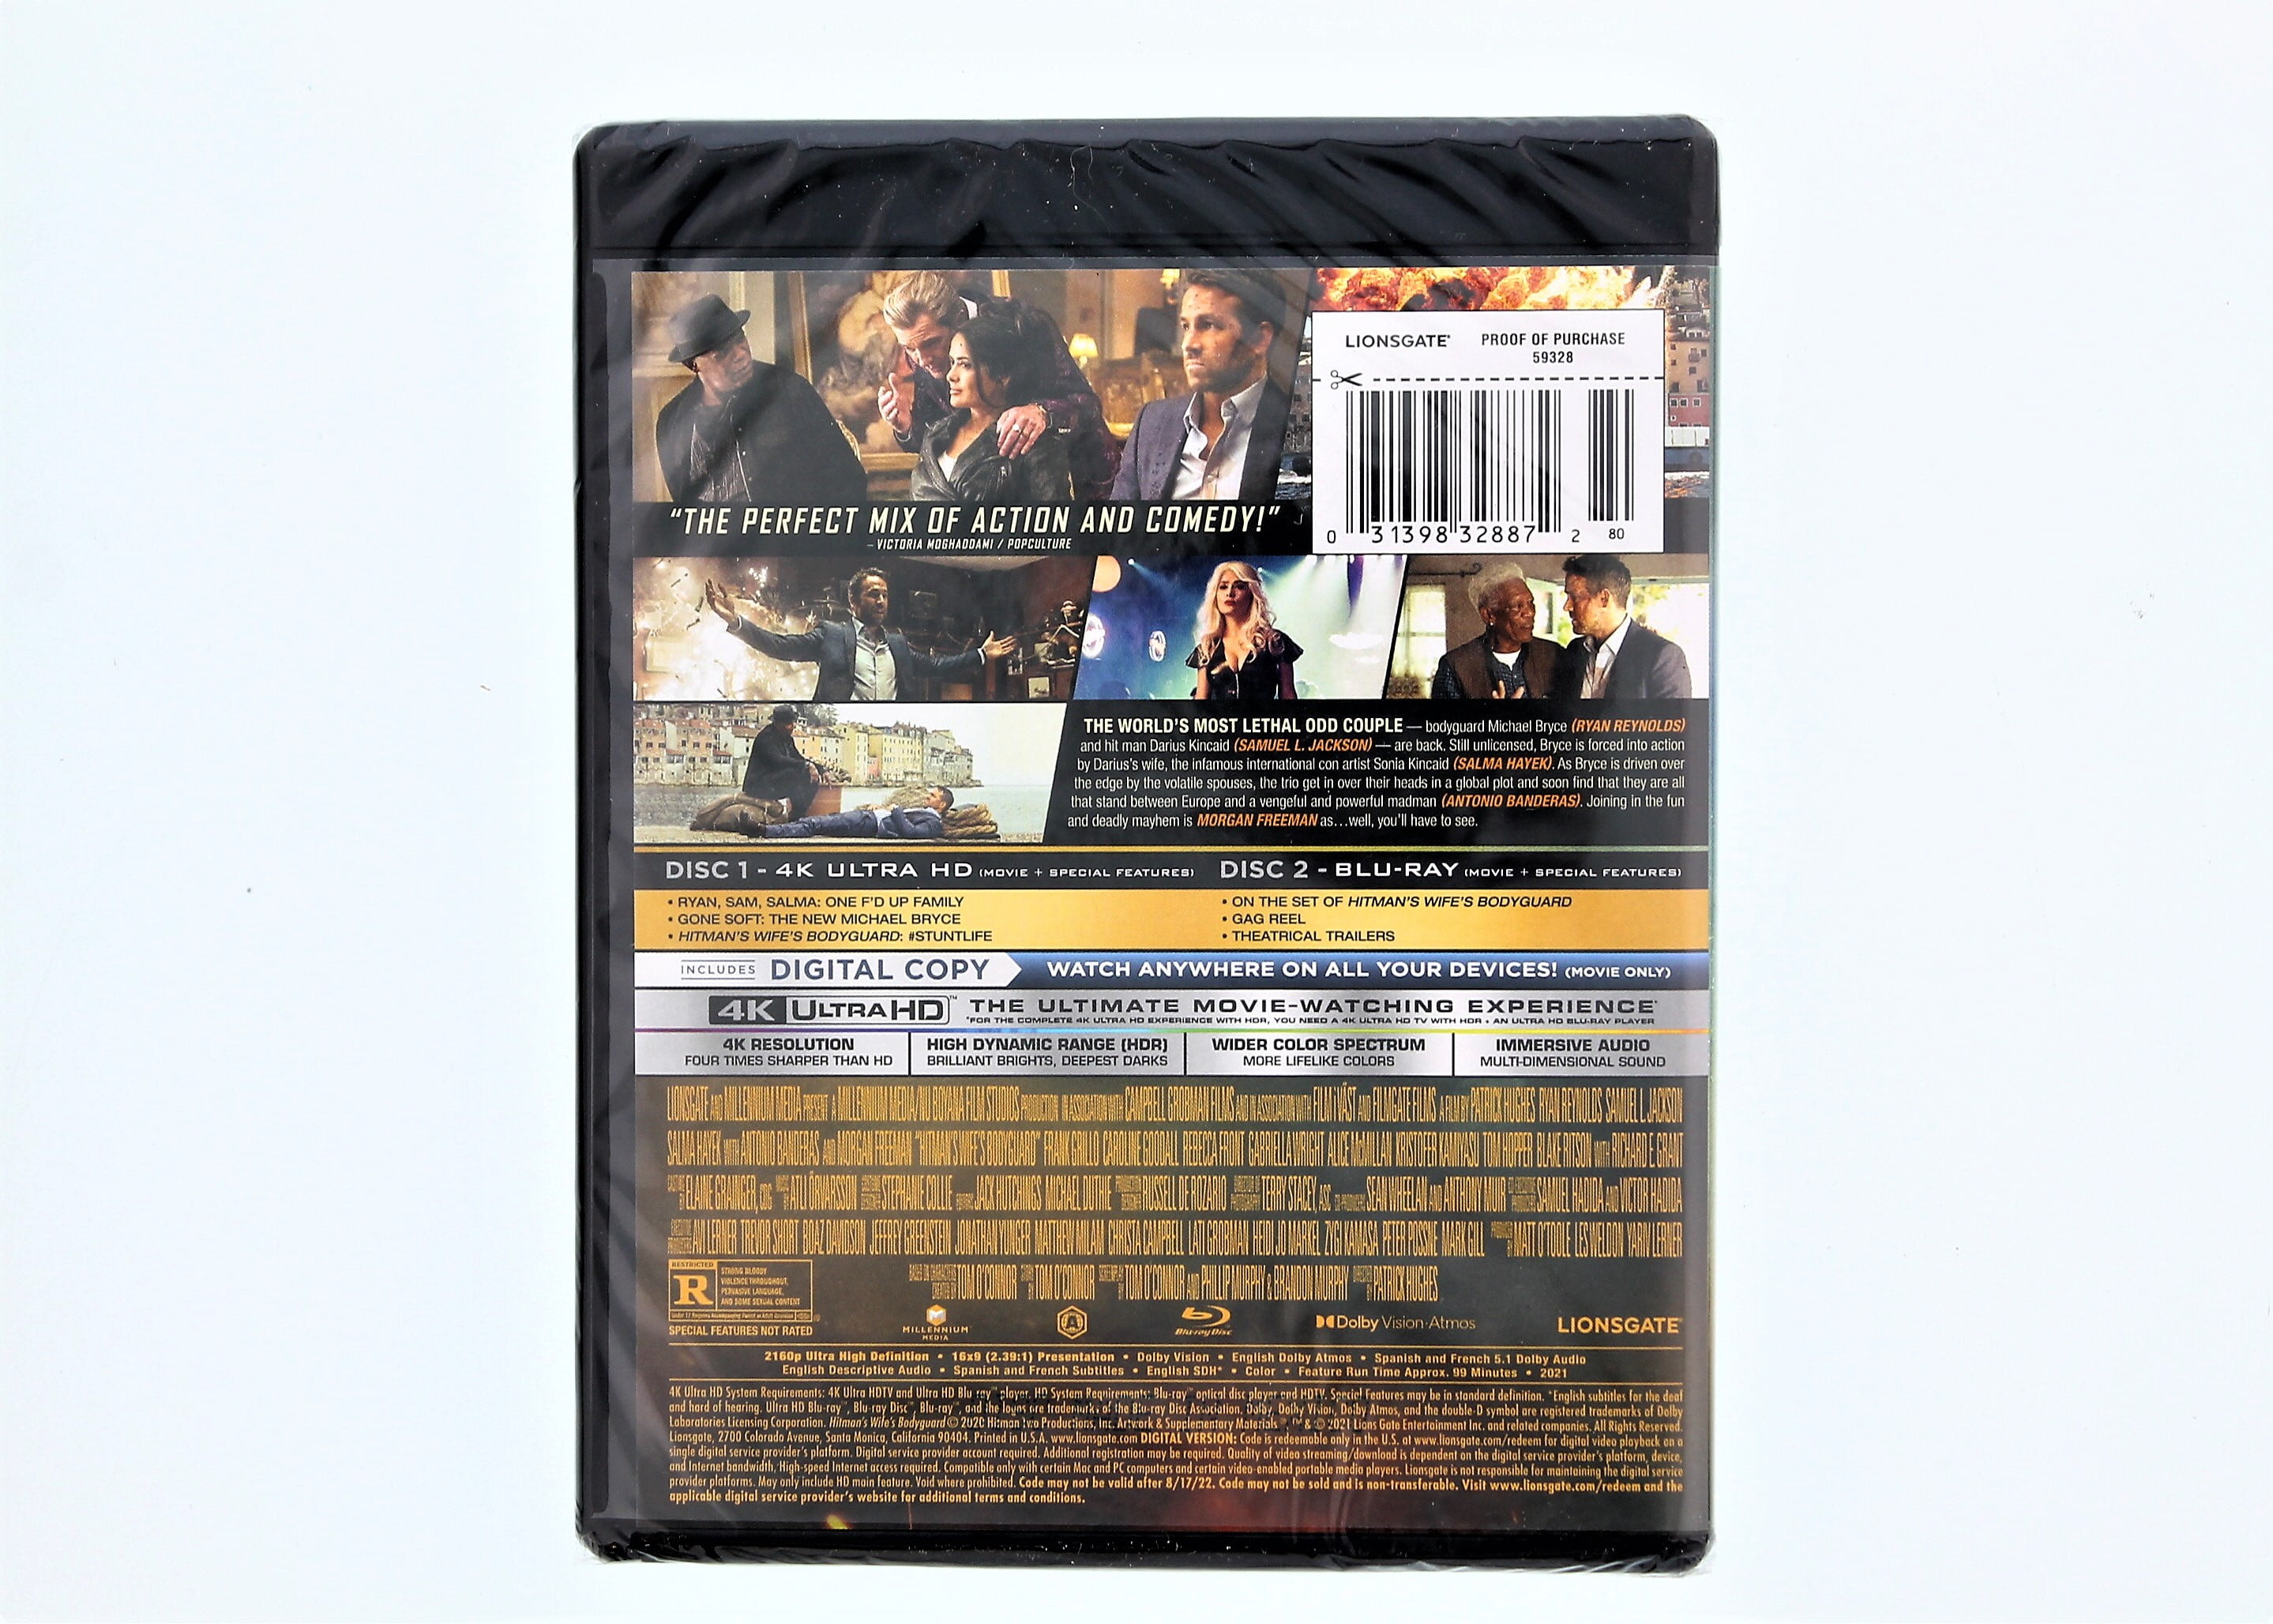 The Hitman's Bodyguard (2016) [DVD / Normal] - Planet of Entertainment